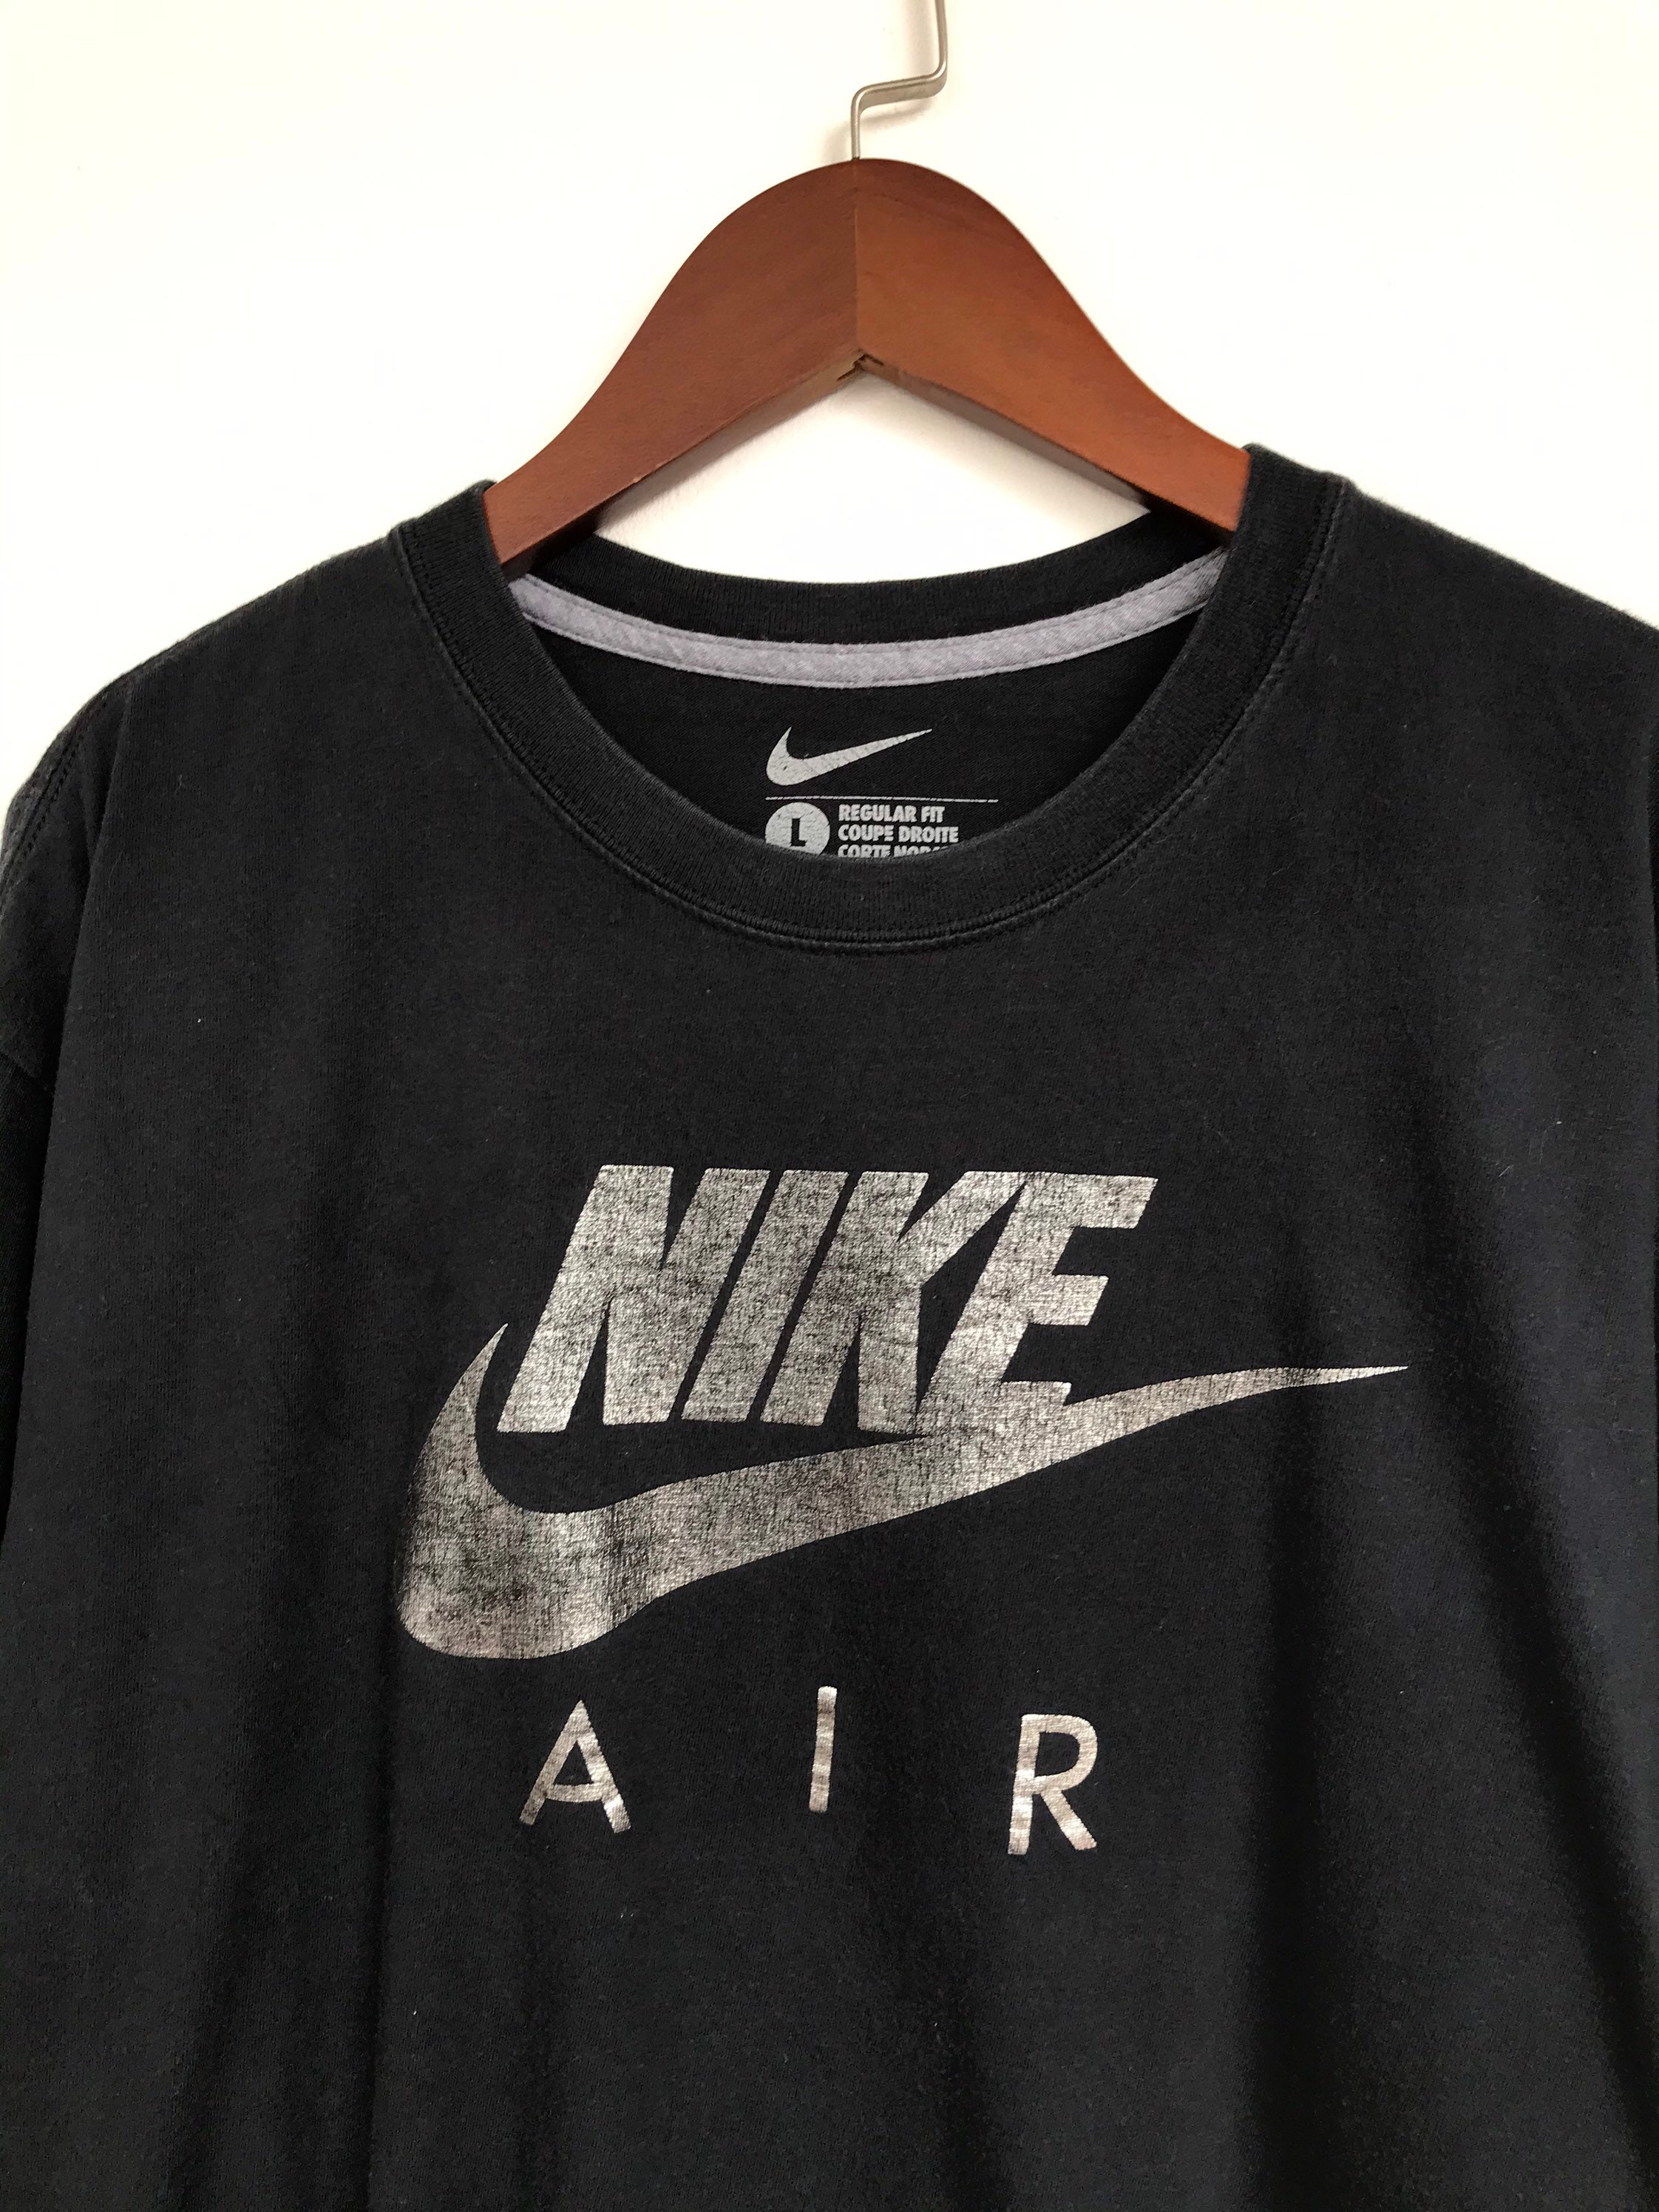 Vintage Adult Tshirt Nike Air Big Logo Spell Out T-shirt | Etsy